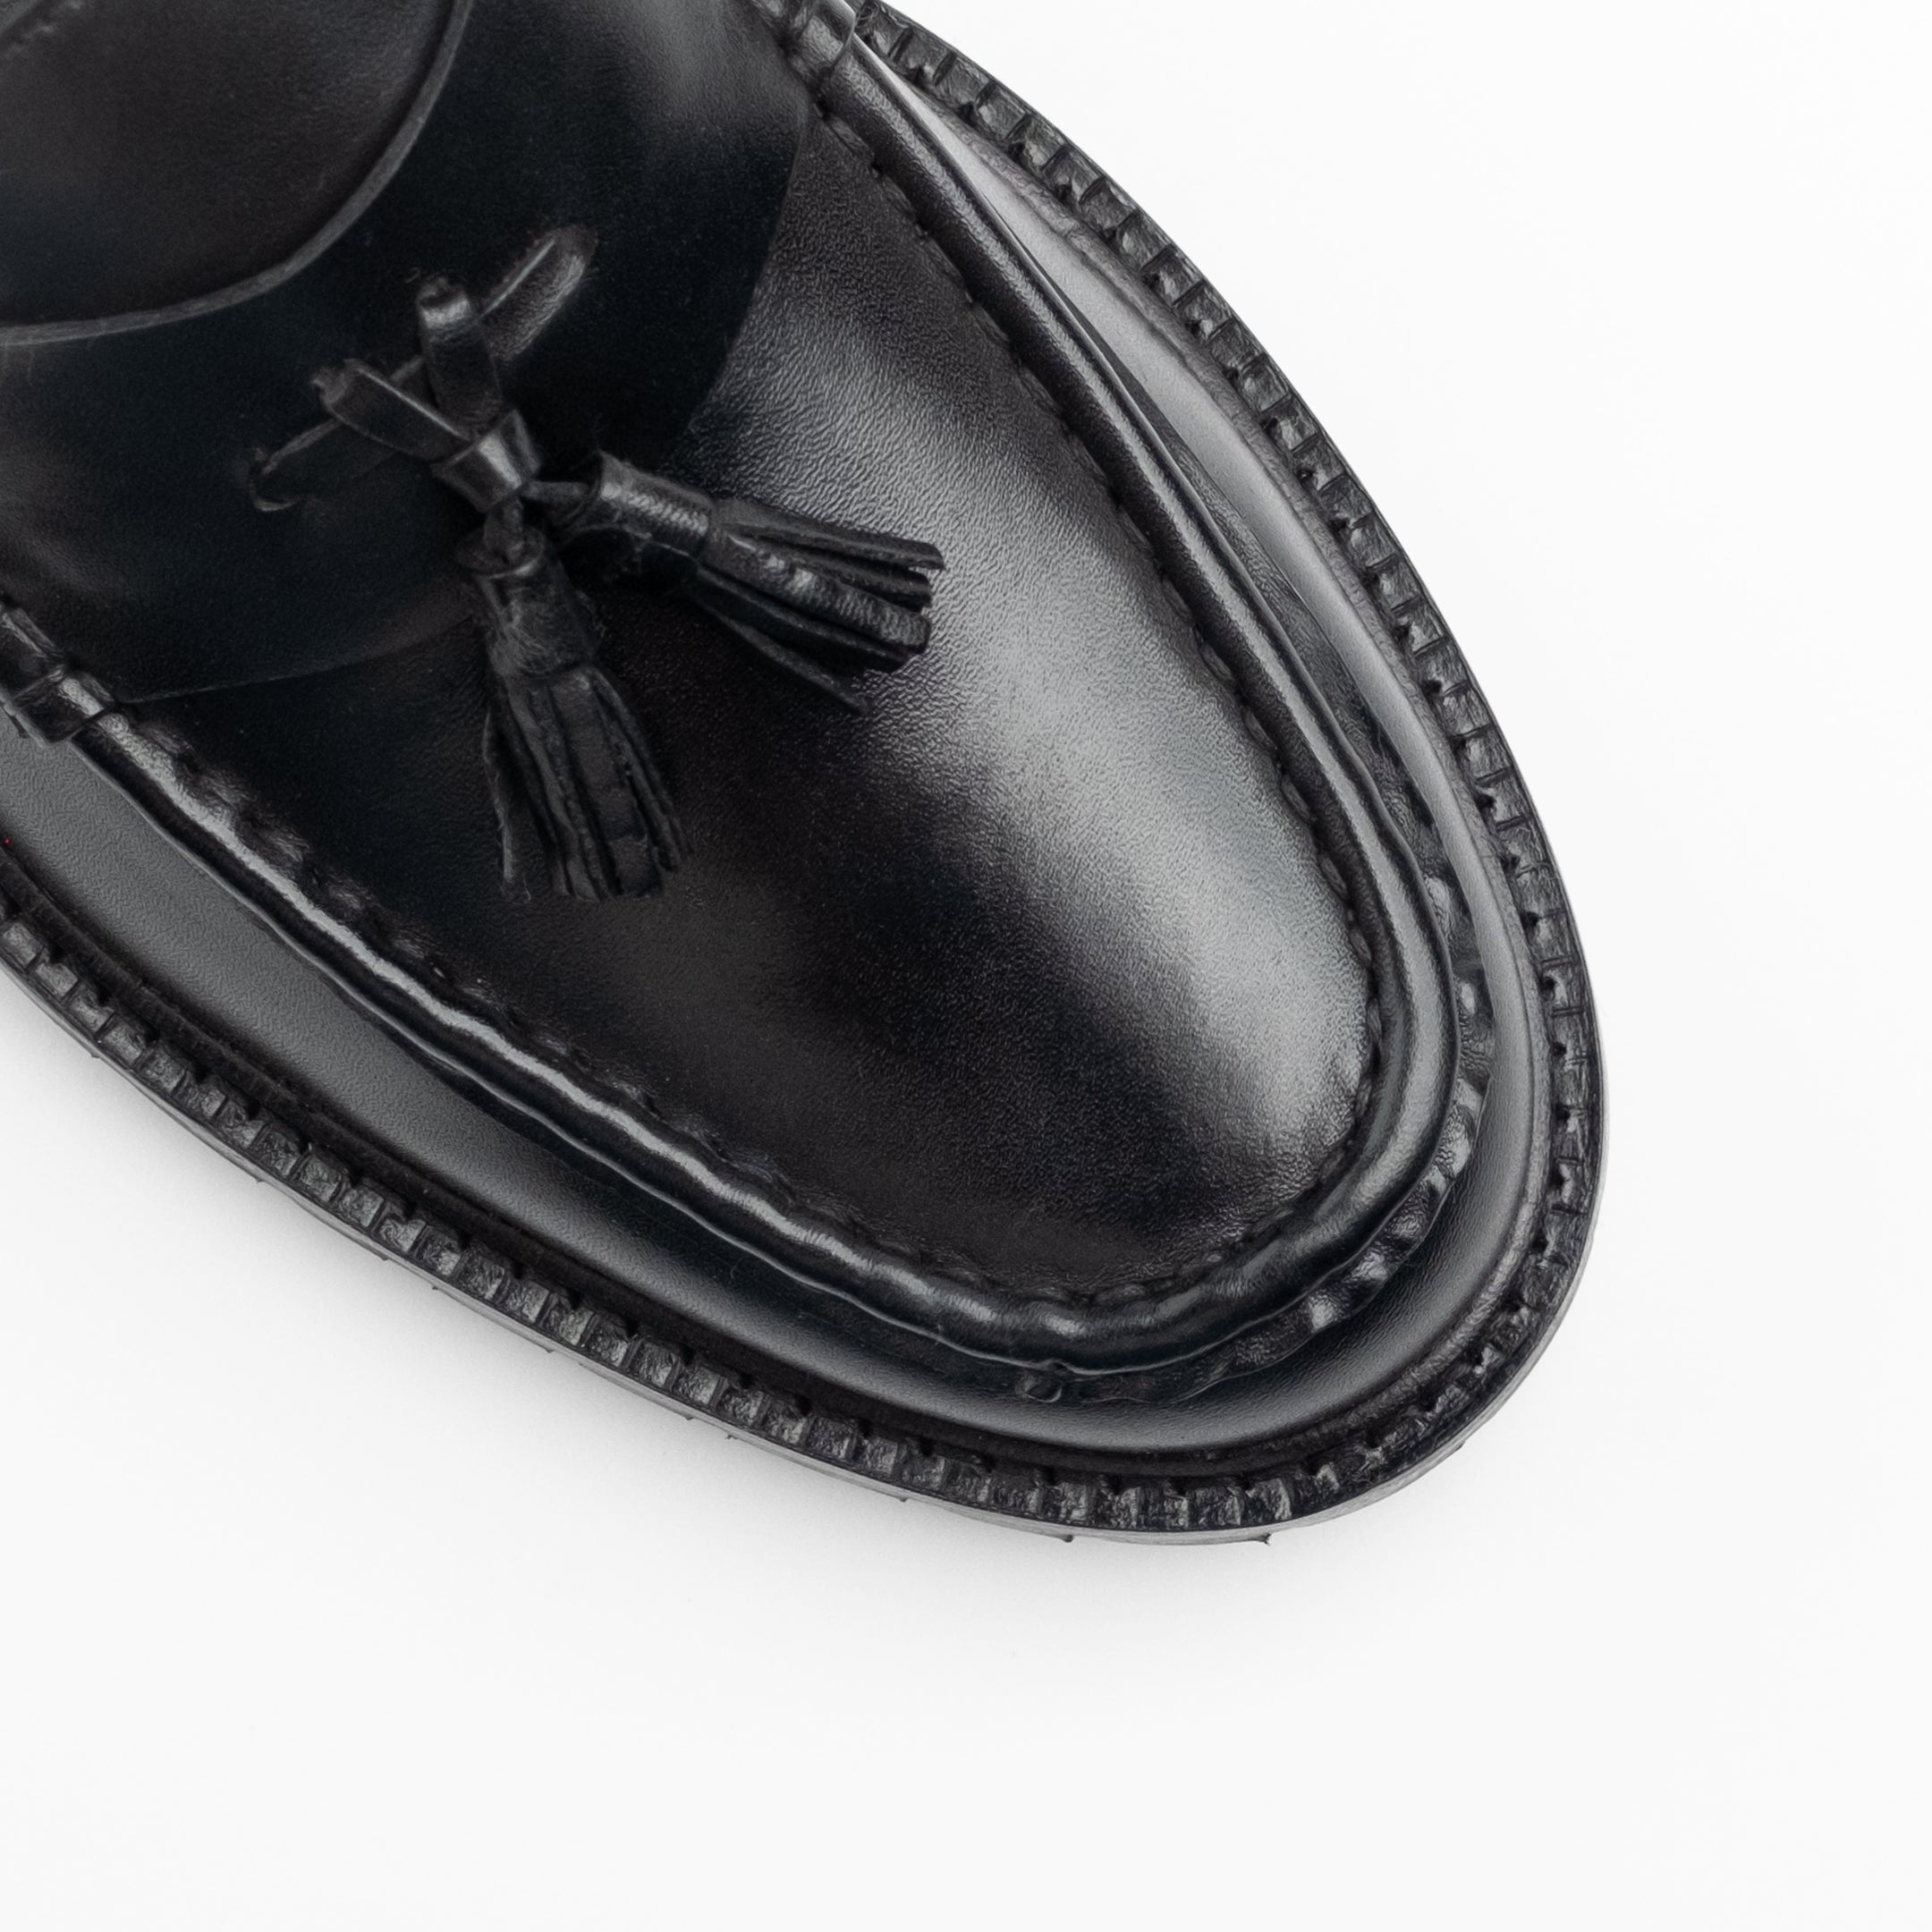 Walk London Mens Campus Tassel Loafer in Black Leather